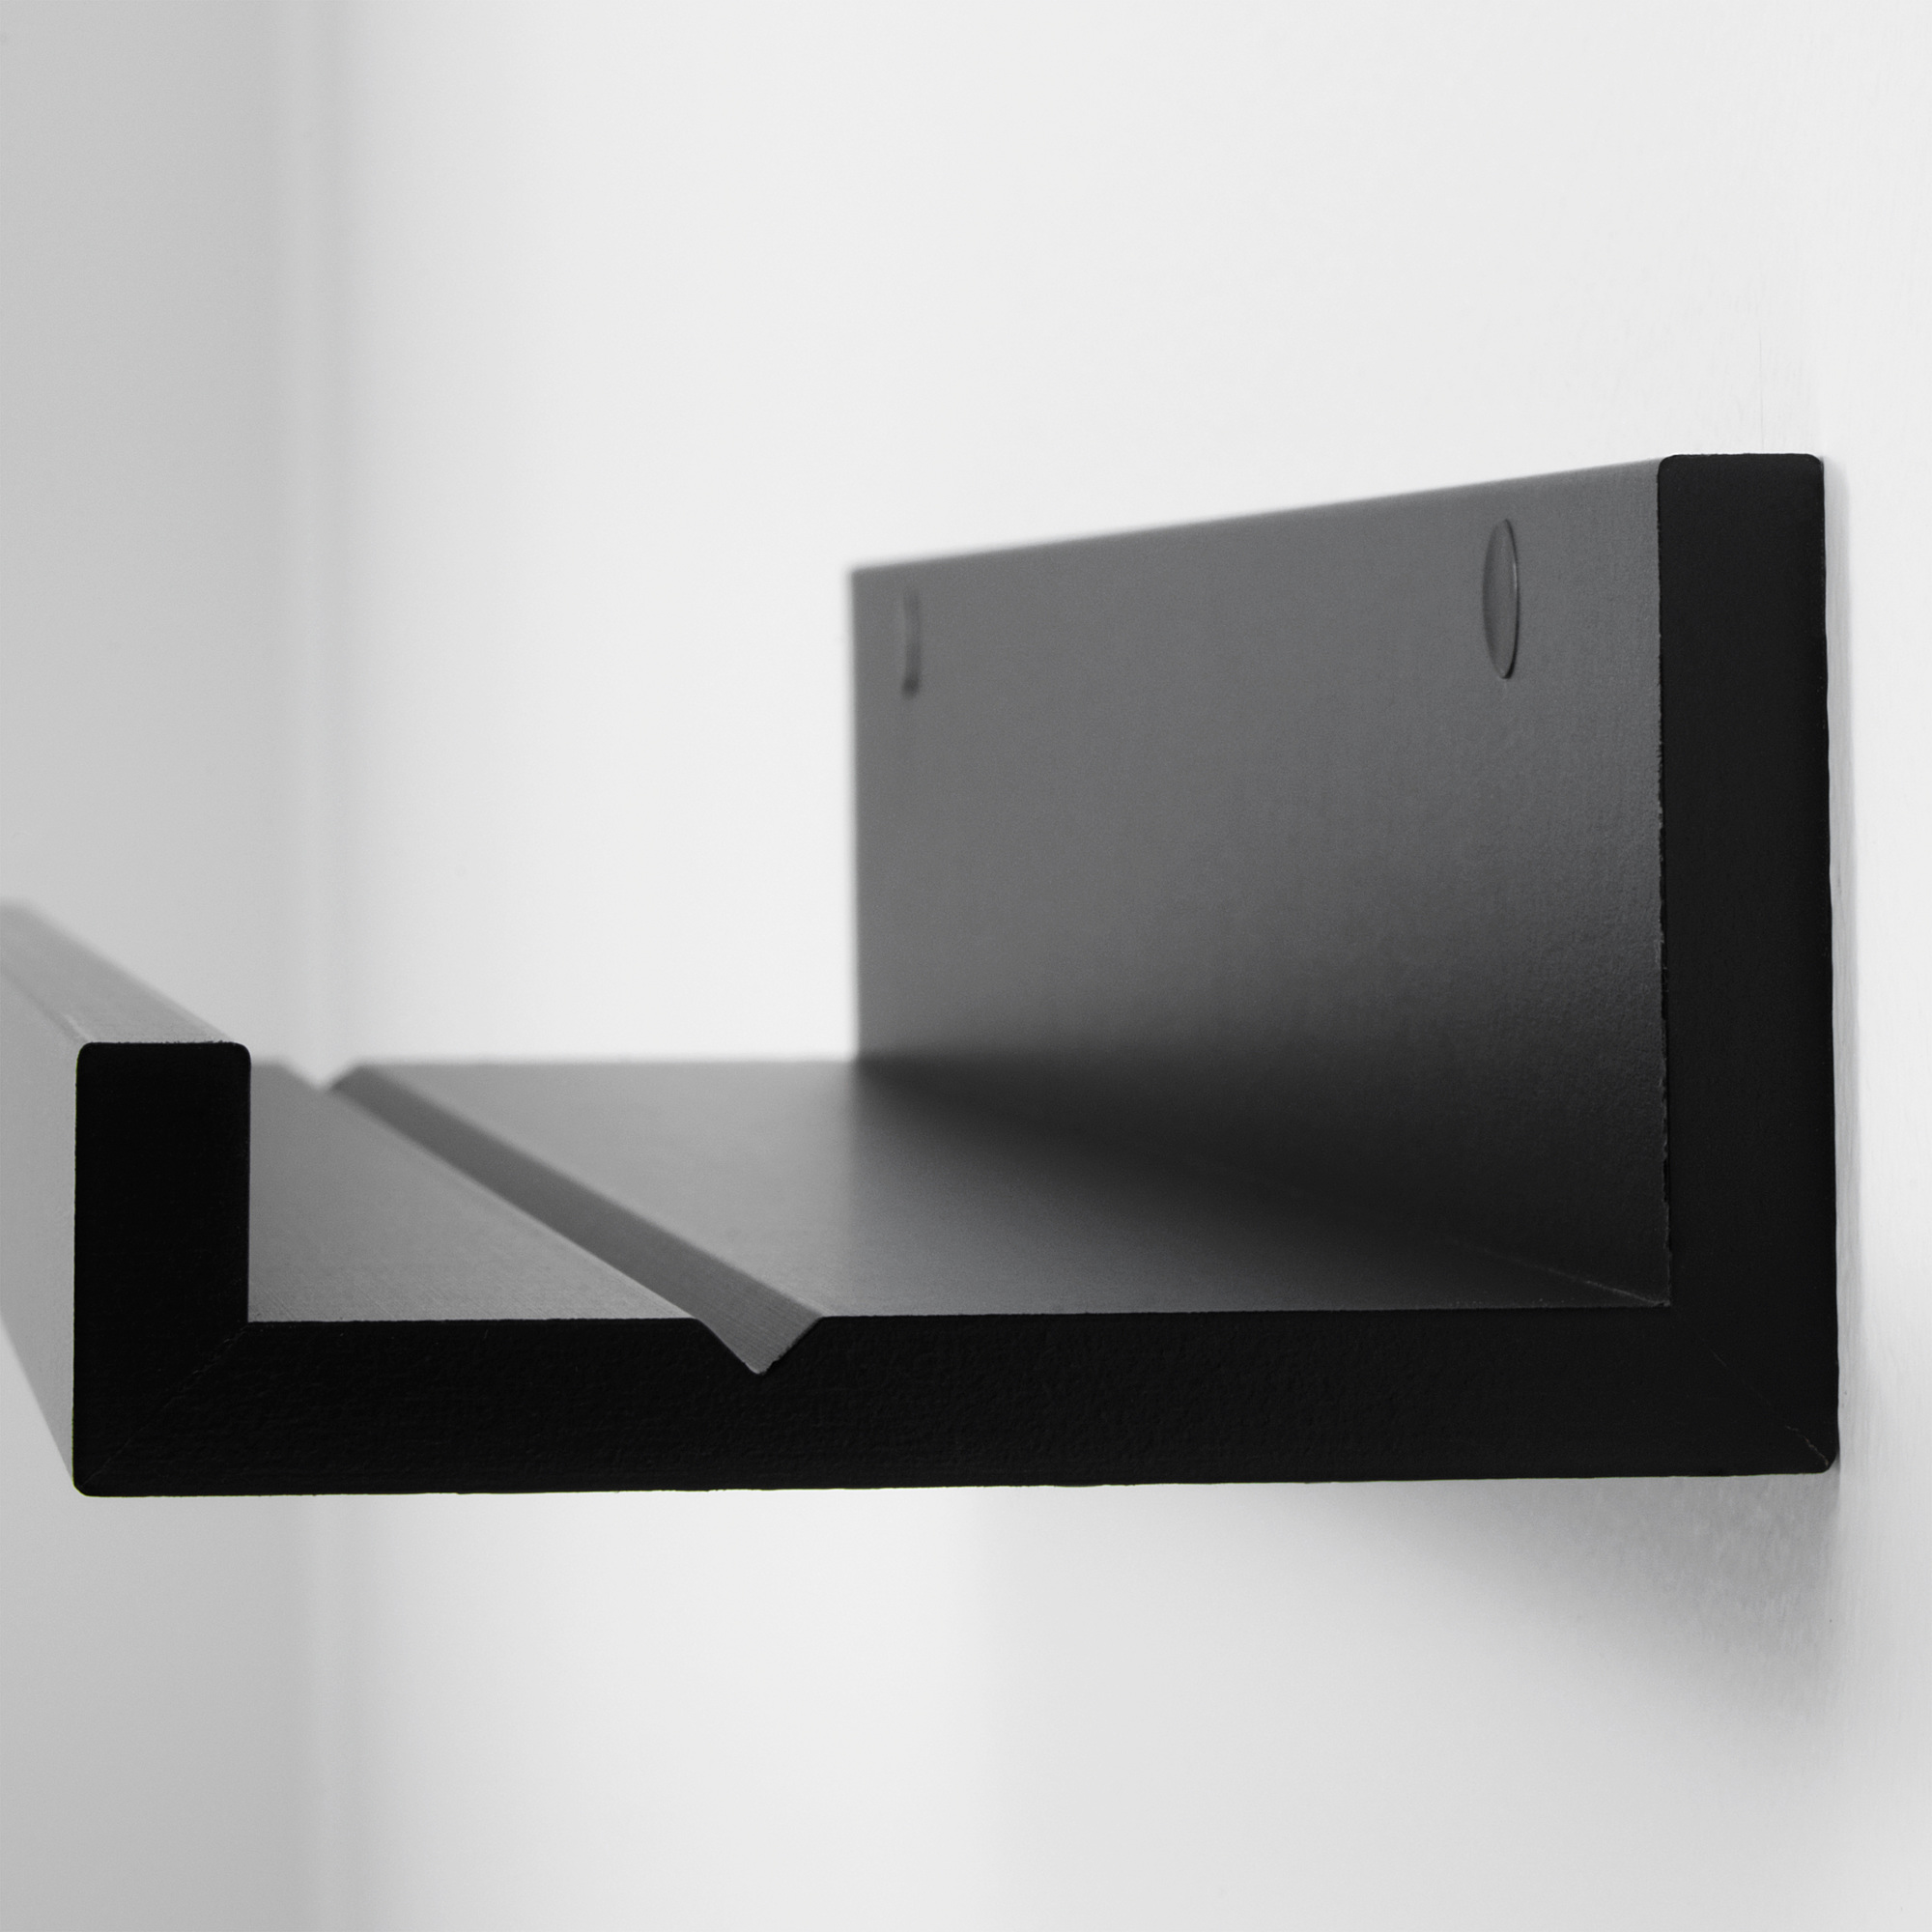 IKEA picture ledge 45" wall floating shelf modern white black rack MOSSLANDA new 